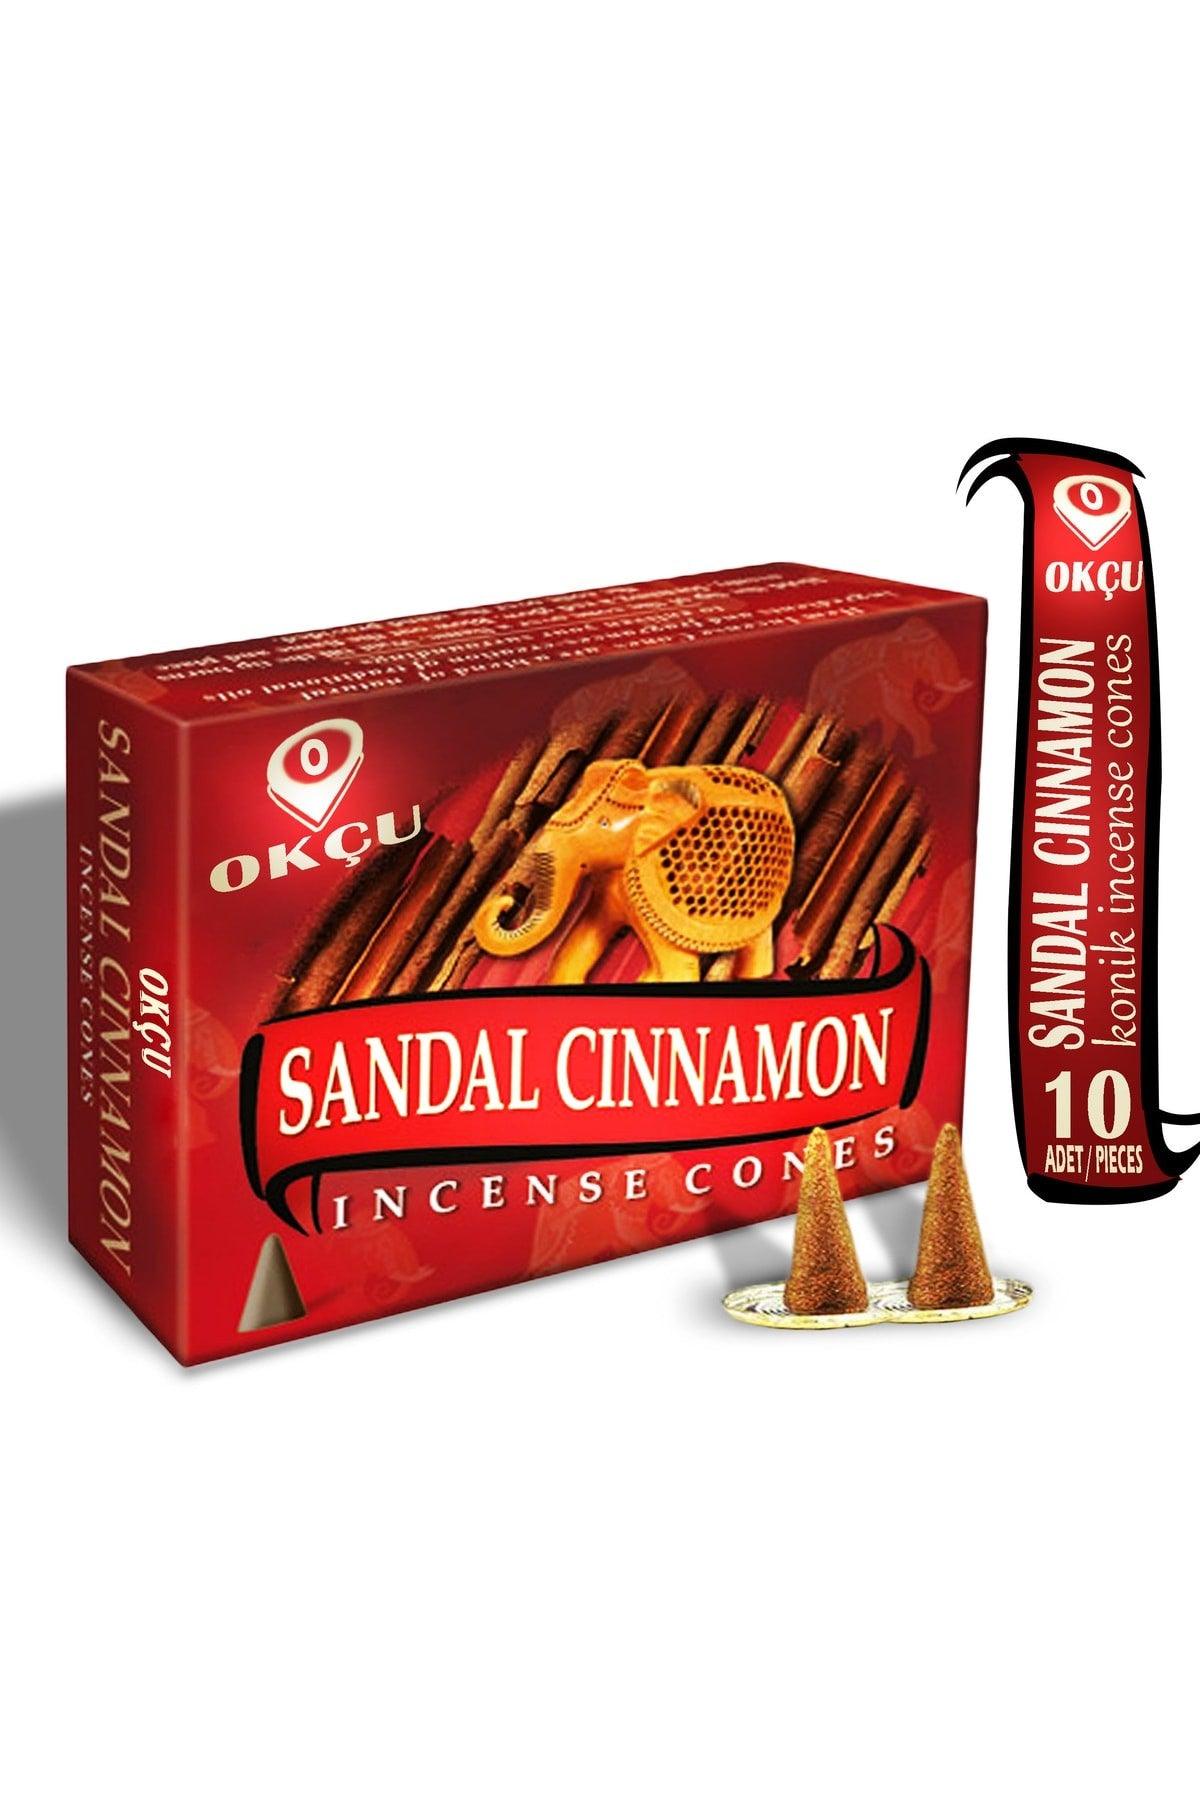 Both Sandalwood Cinnamon / Cinnamon Conical Incense 10 Pcs Not Backflow - Swordslife